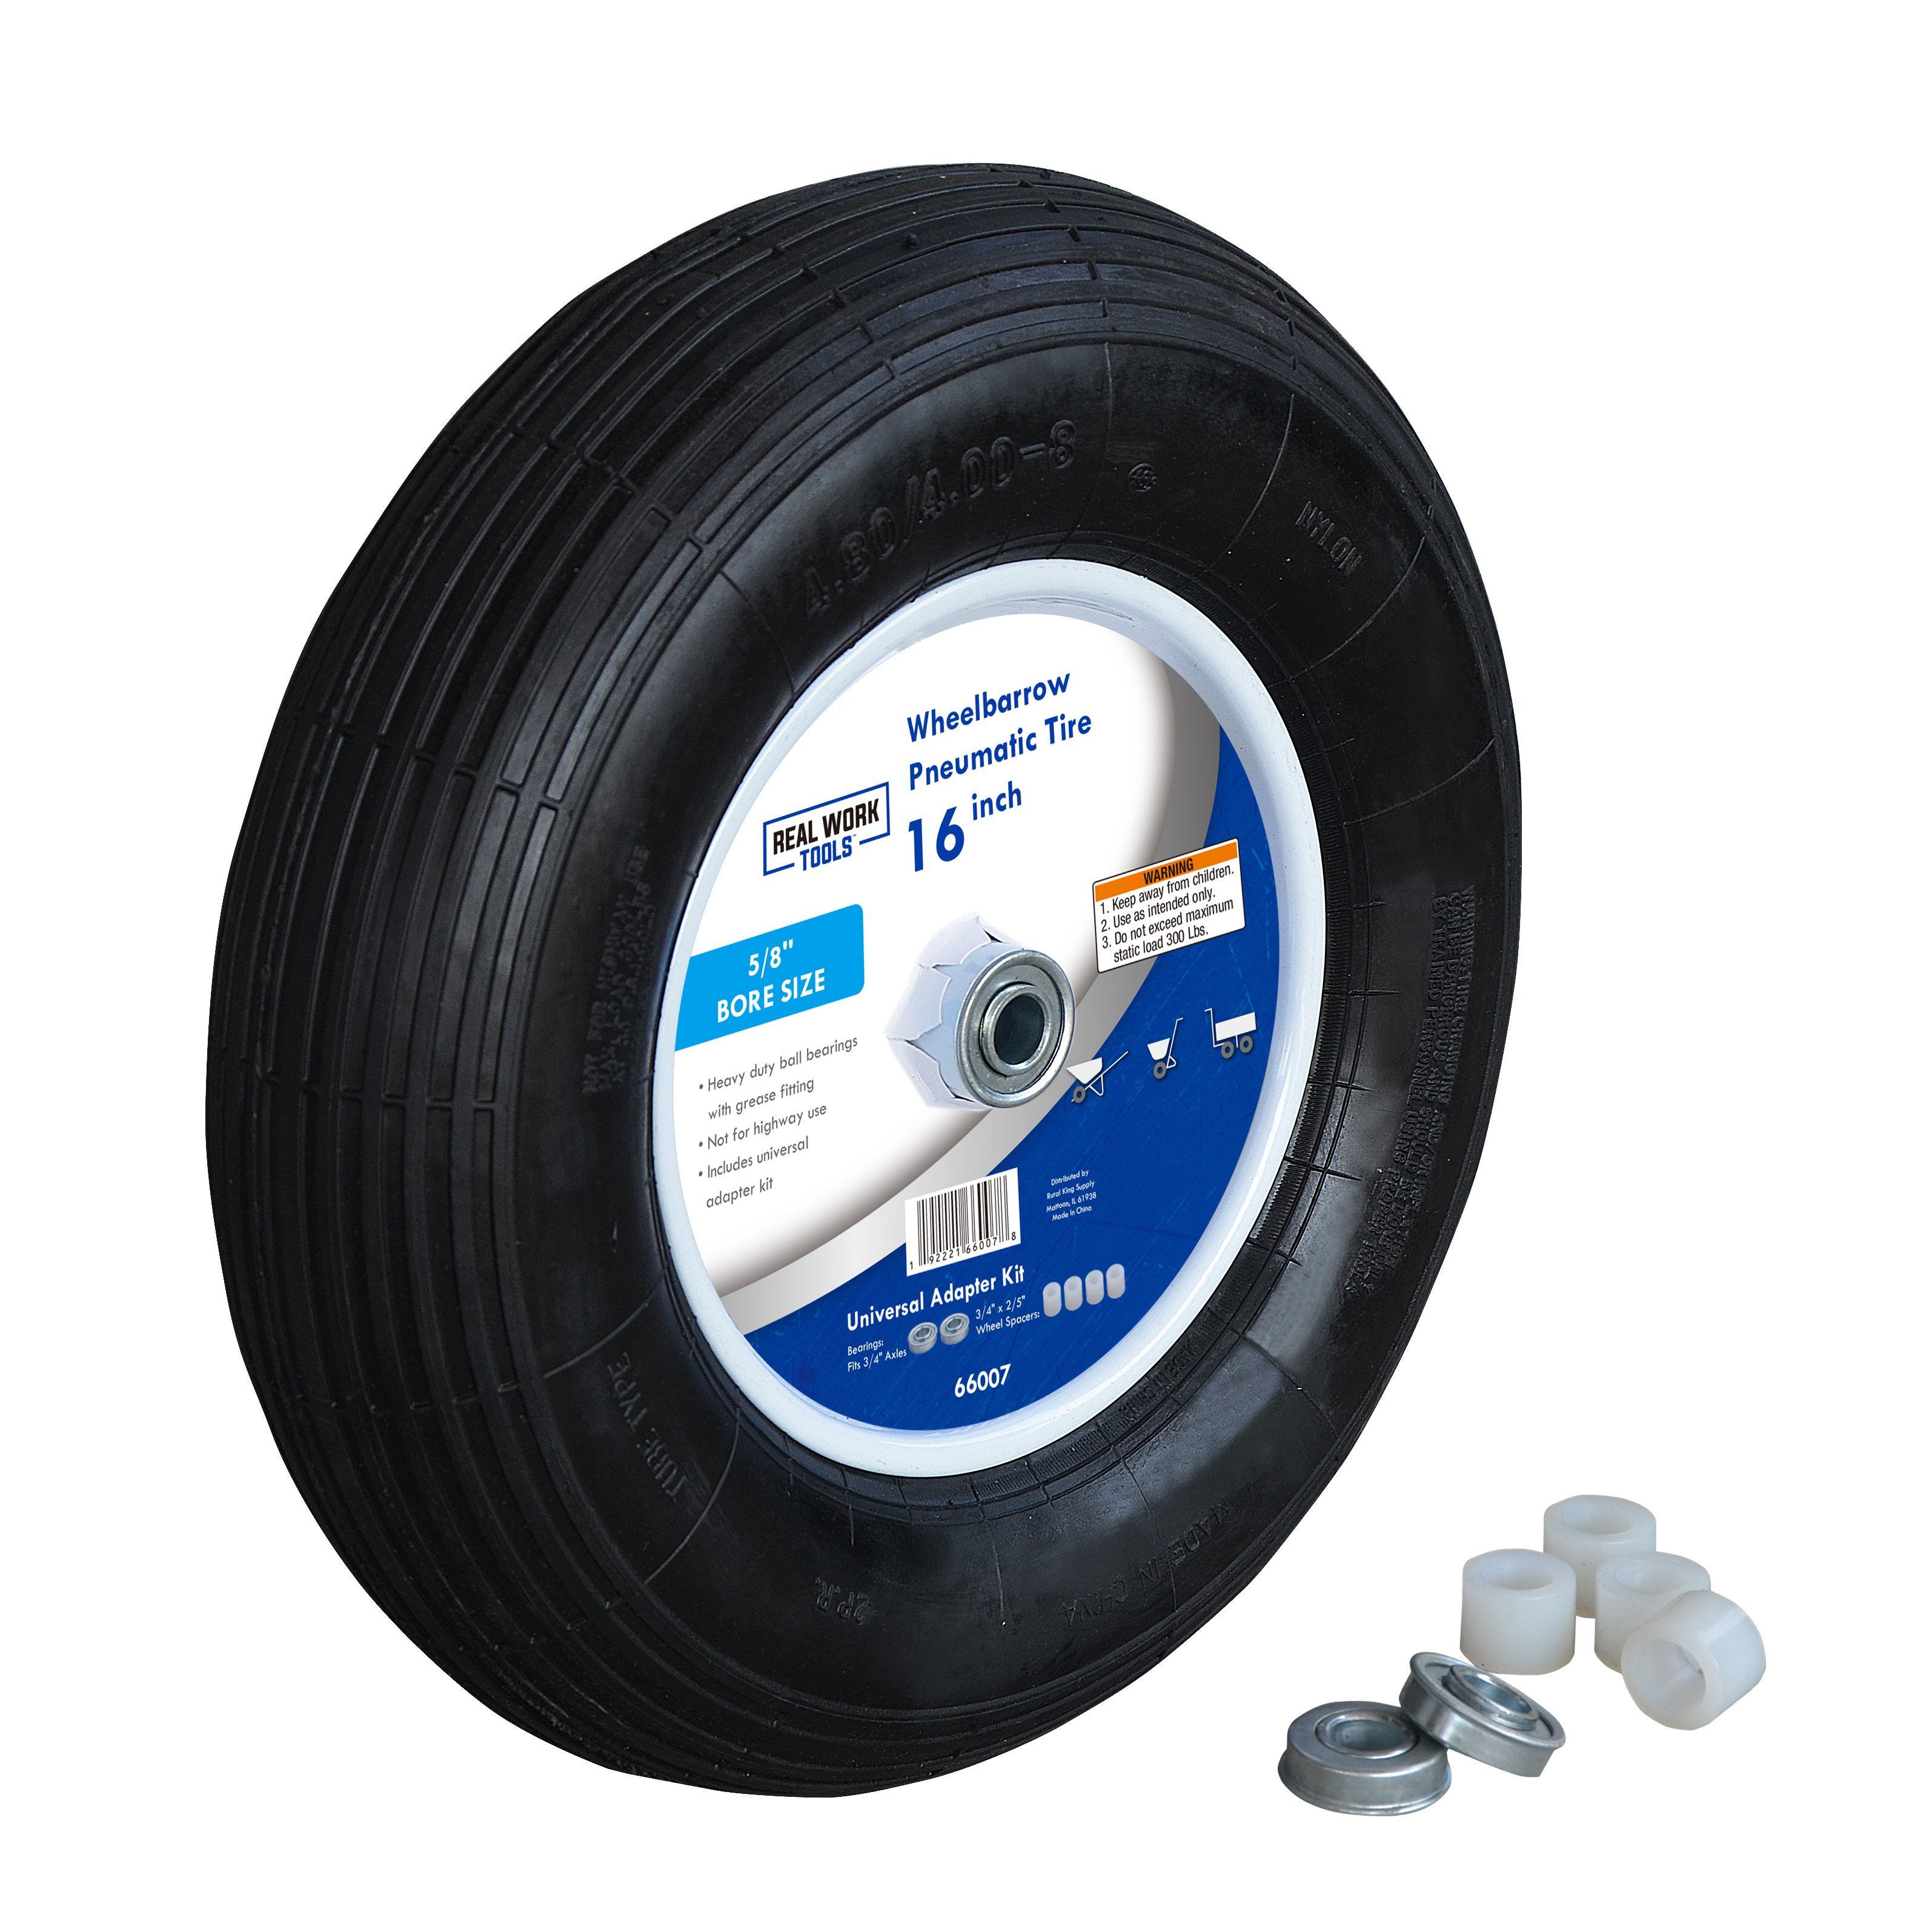 16 Inch Pneumatic Wheelbarrow Tire with Universal Bearing Kit - 66007